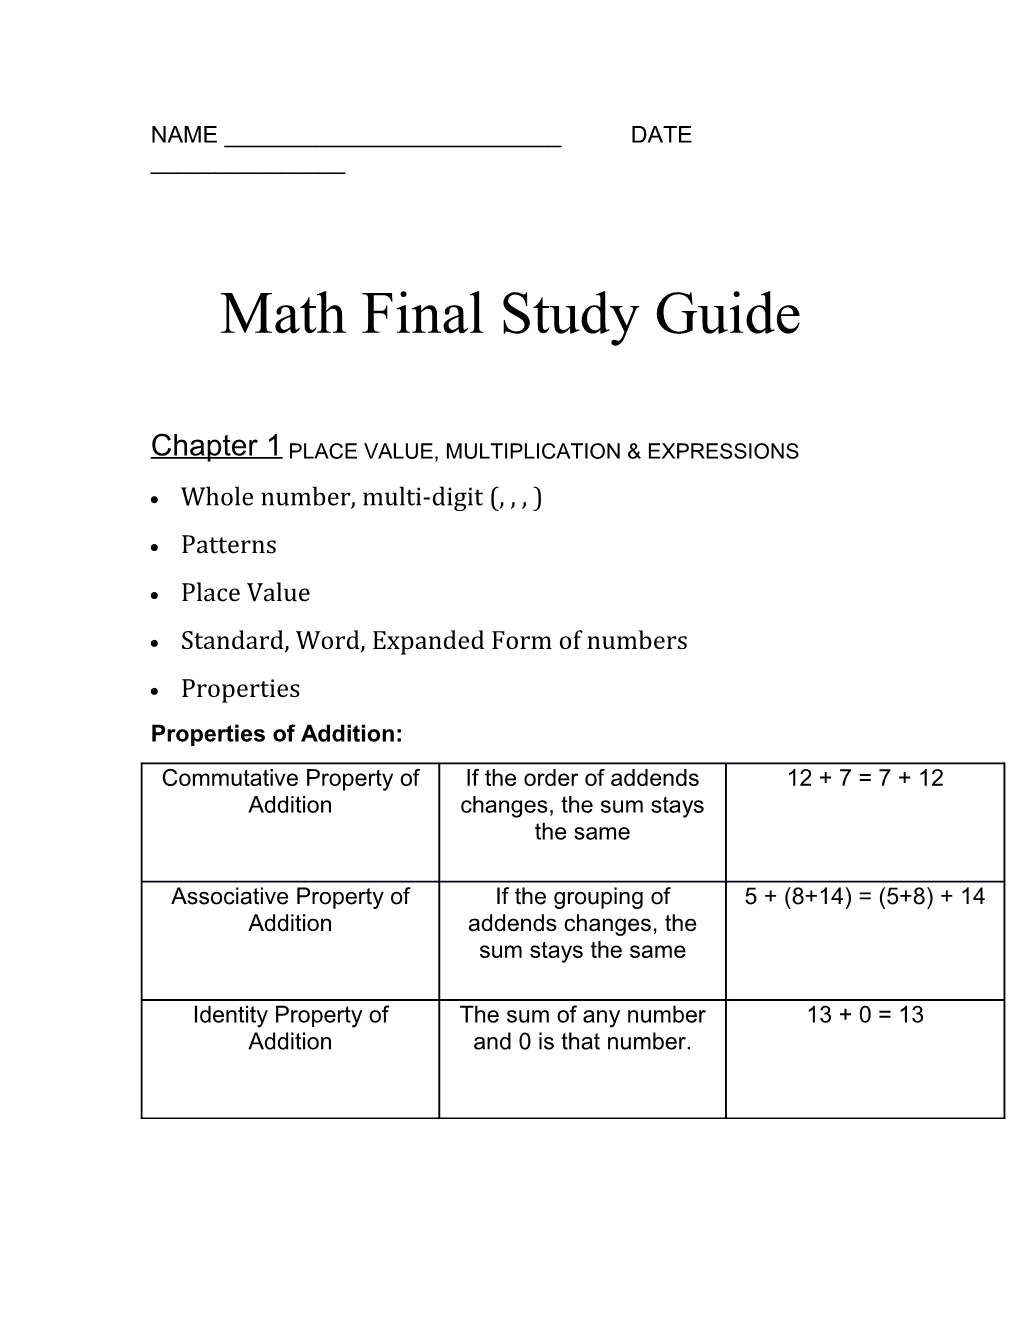 Math Final Study Guide